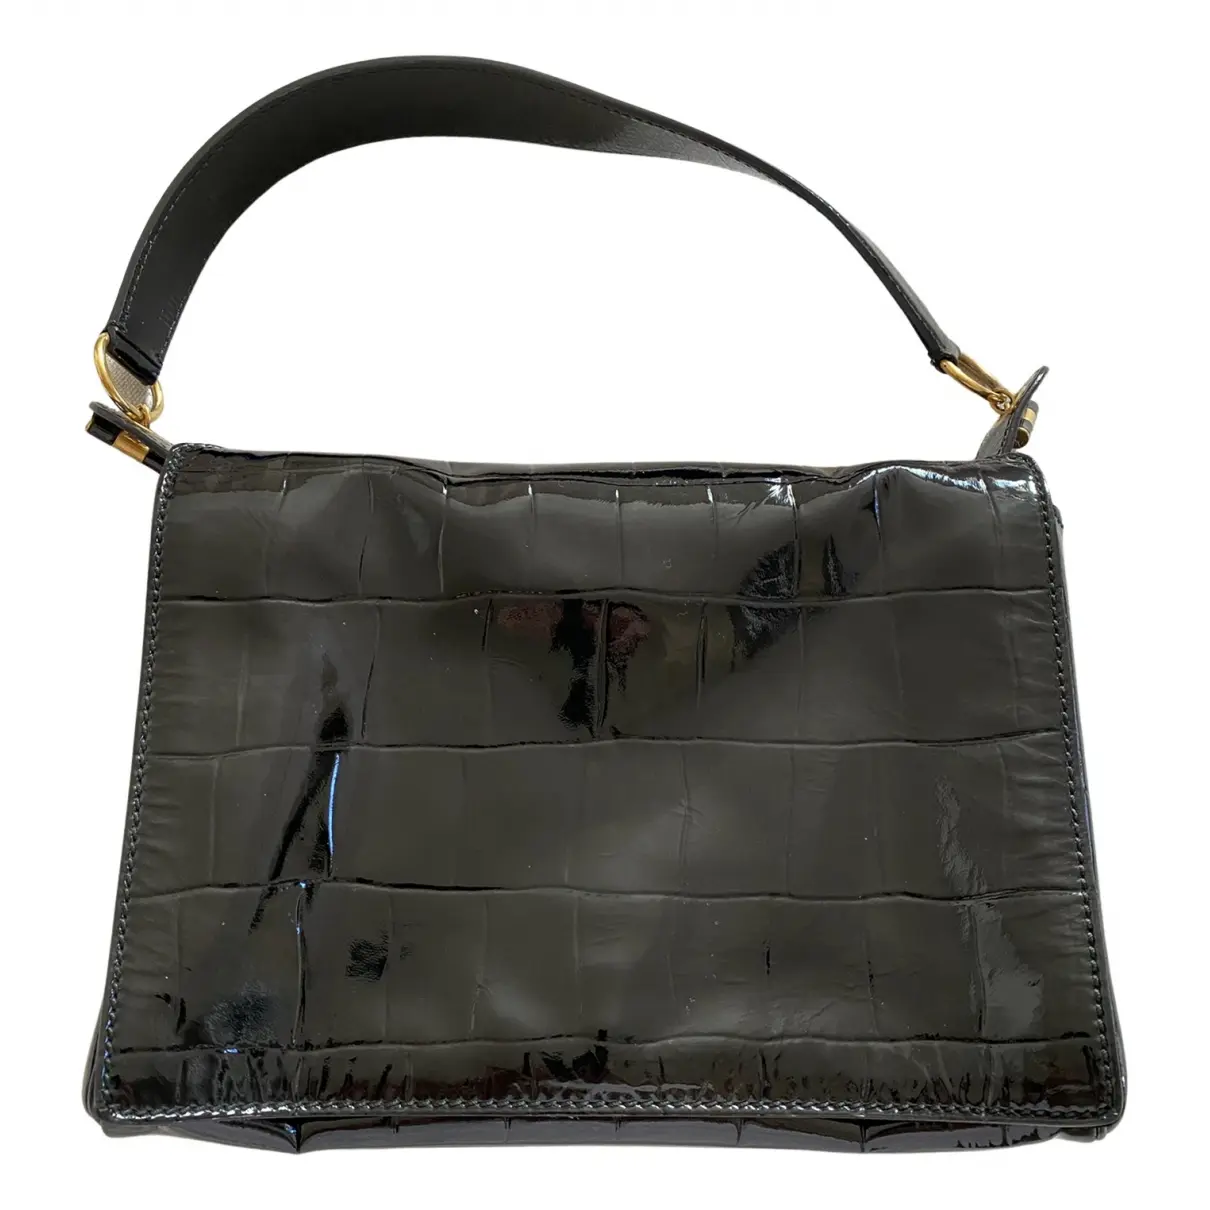 Patent leather handbag Yves Saint Laurent